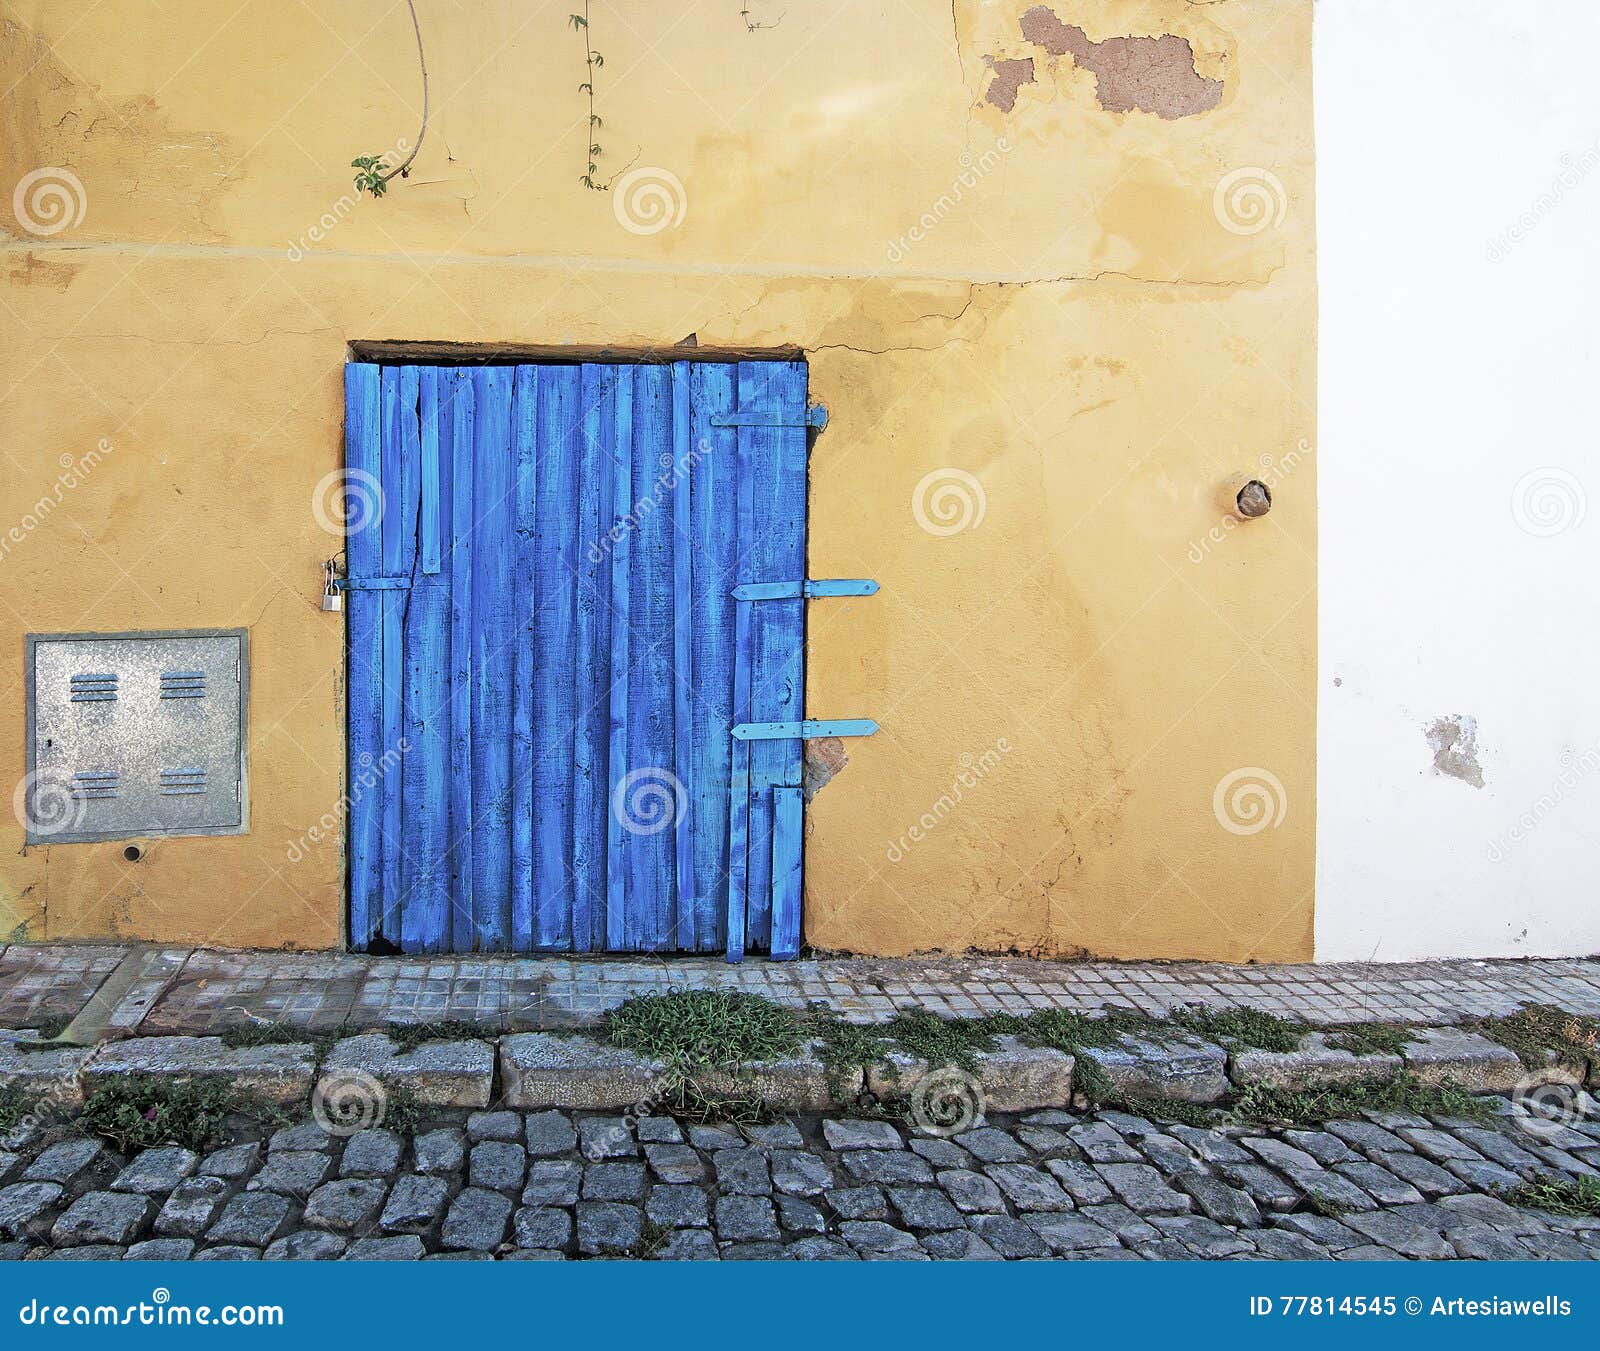 blue wood door on rustic yellow wall